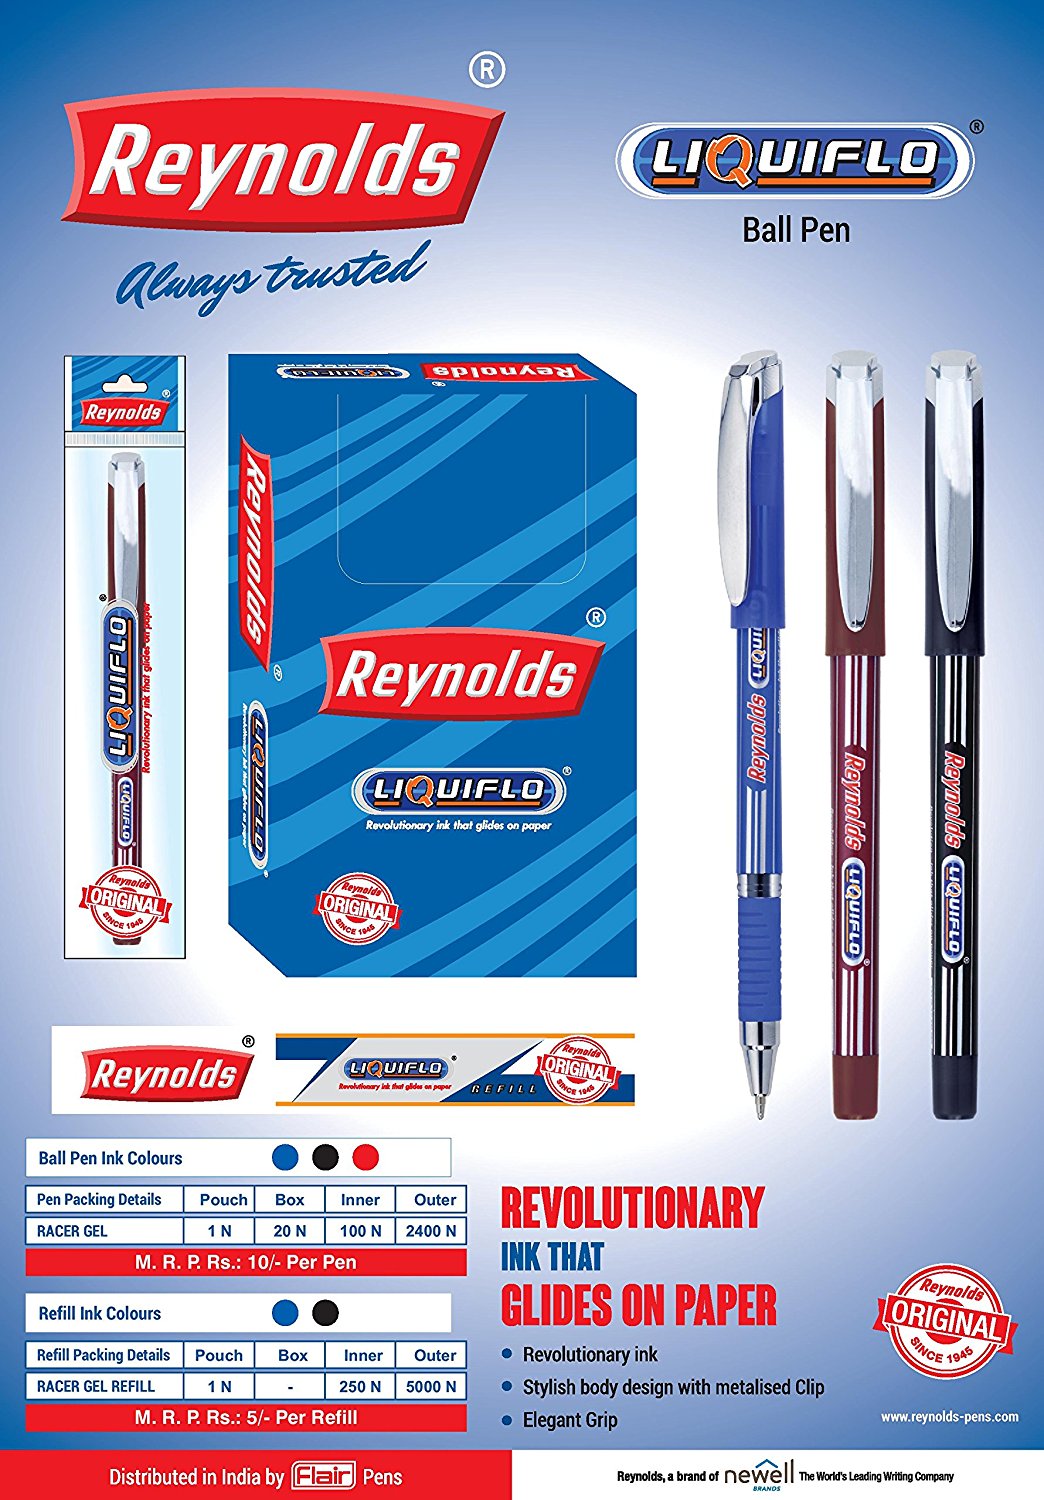 Reynolds Liquiflo Ball Pen Blue (Pack of 5)